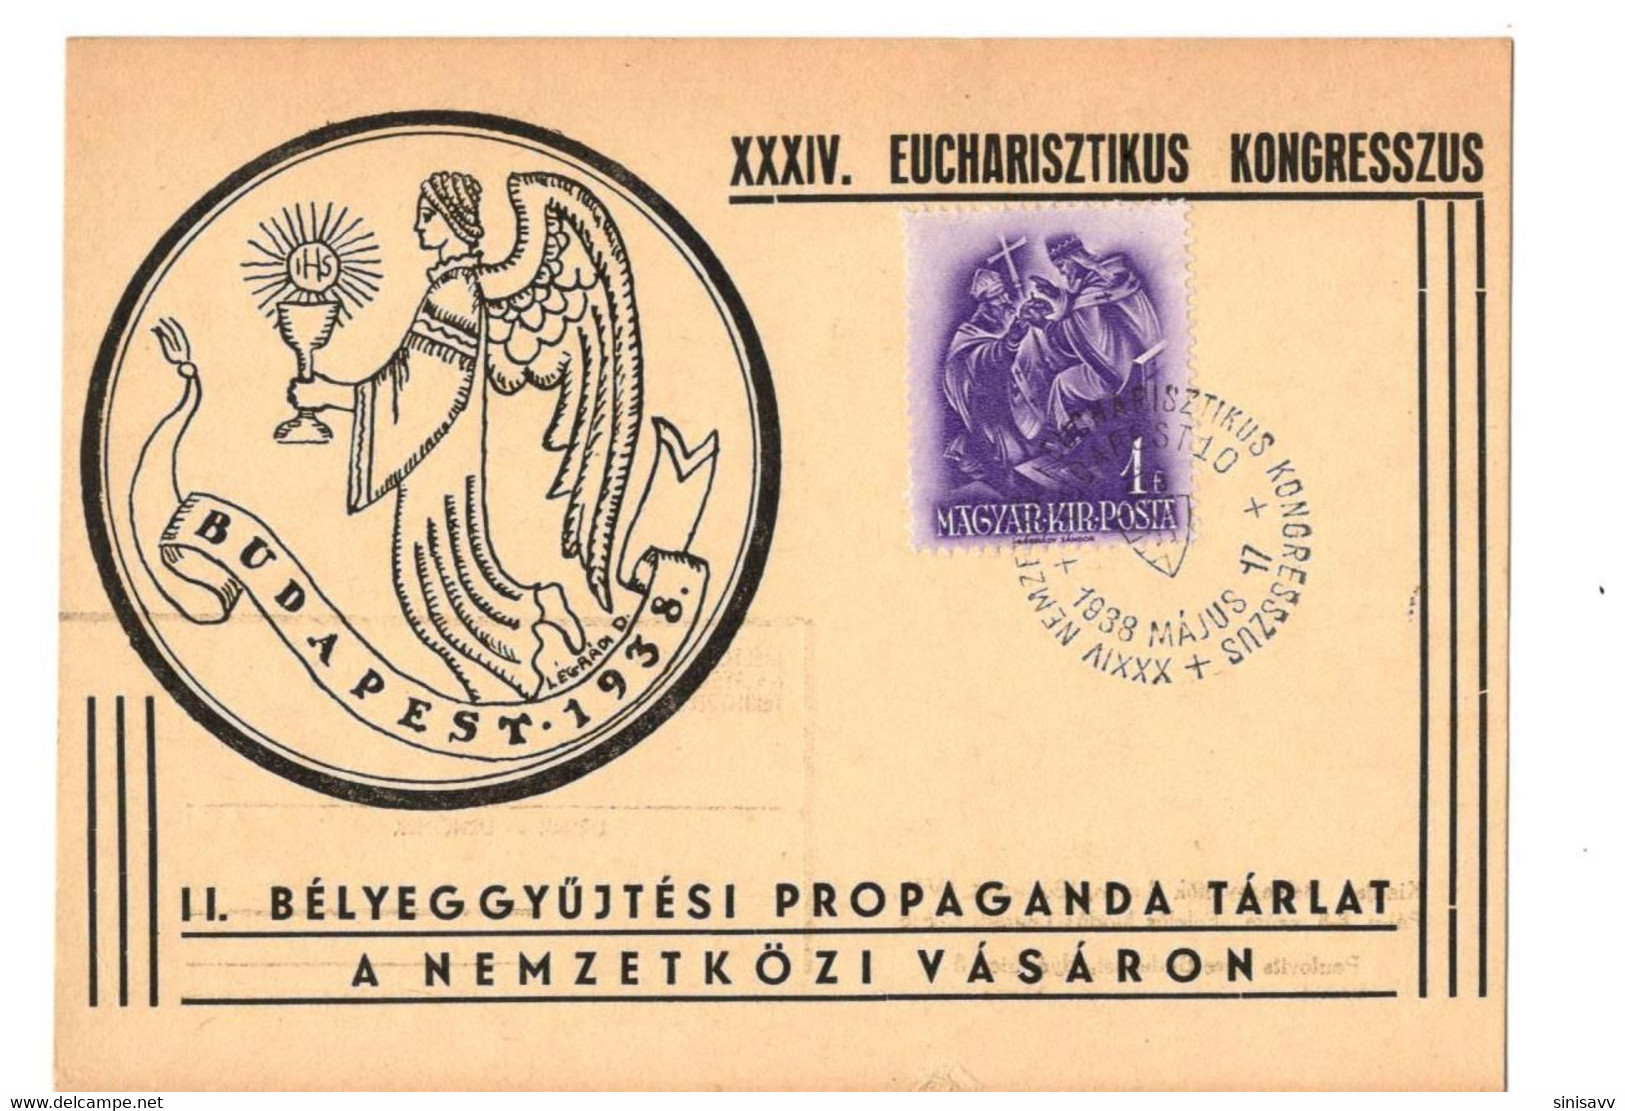 HUNGARY - XXXIV. EUCHARISZTIKUS KONGRESSZUS 1938 - Commemorative Sheets